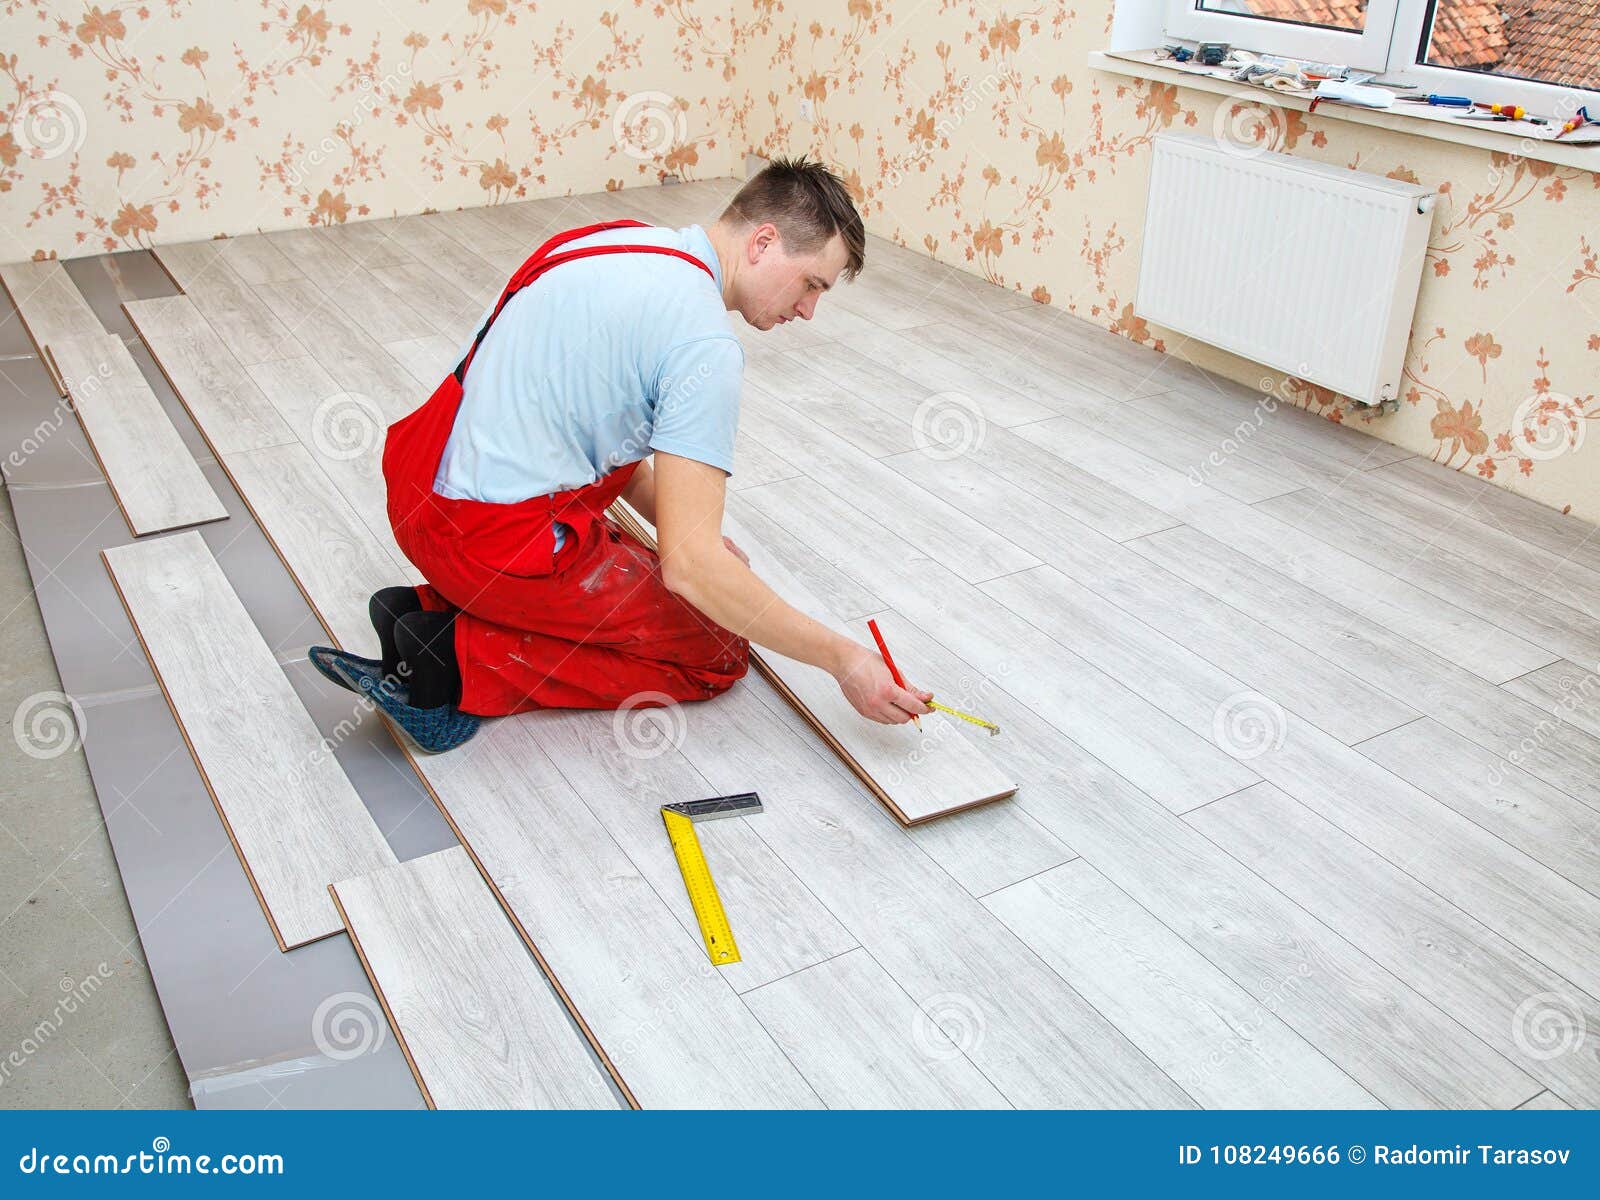 Handyman Laying Down Laminate Flooring Boards Stock Photo Image